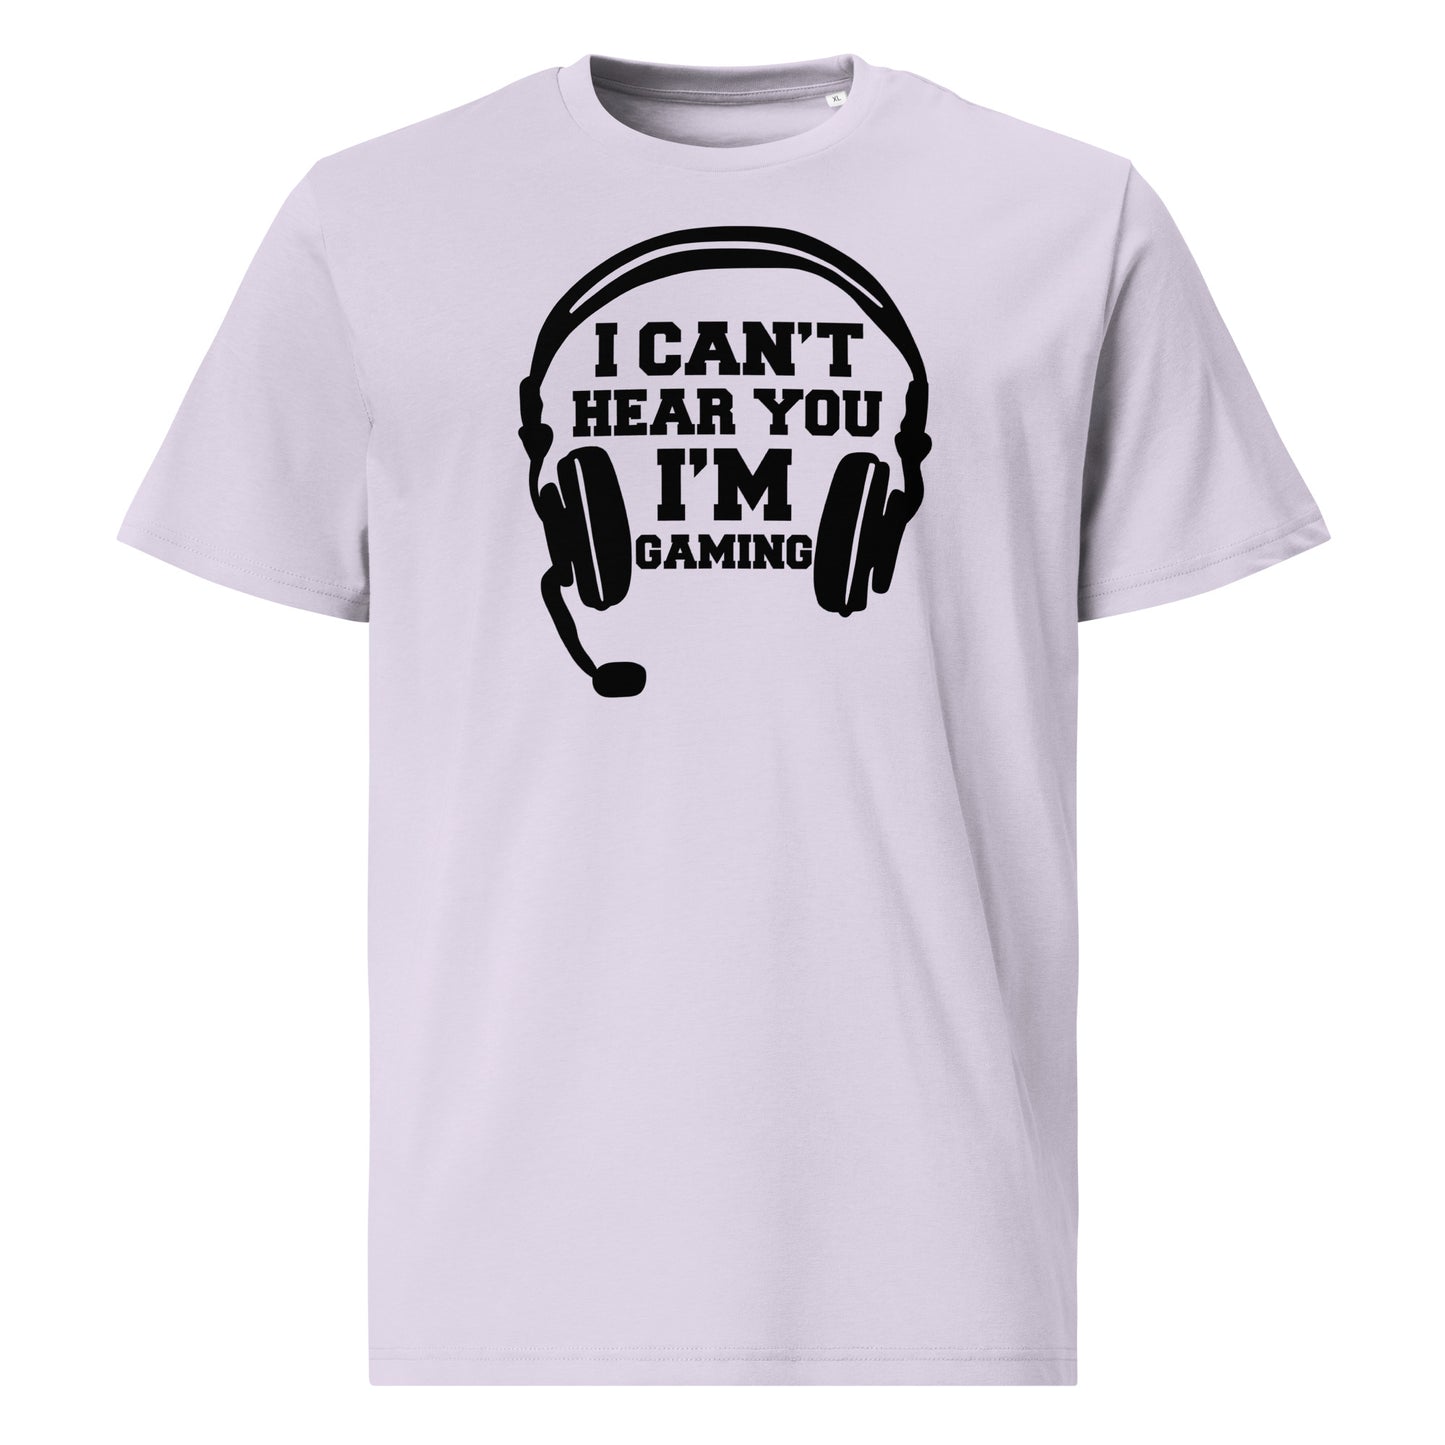 Organic Cotton Unisex T-Shirt: I can't hear you, i'm gaming